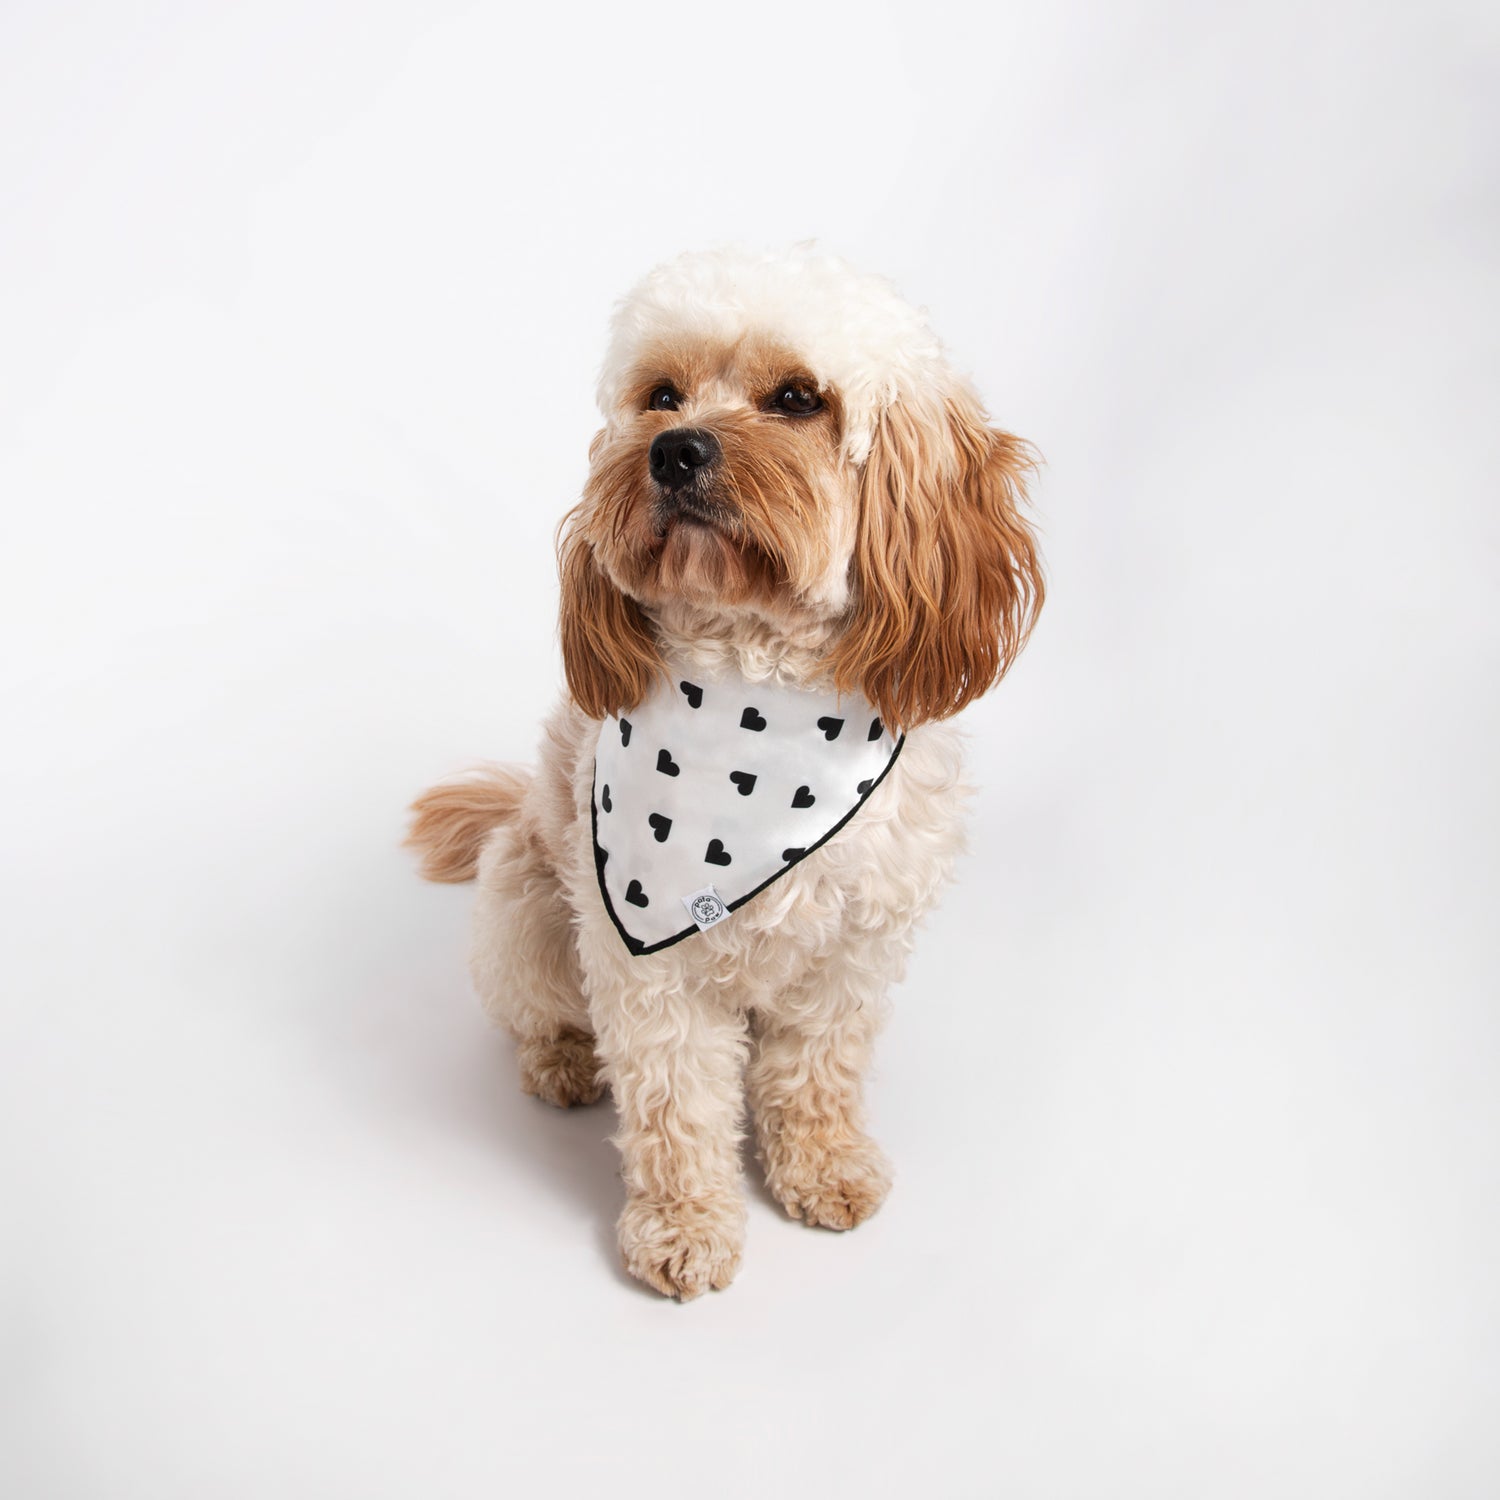 Pata Paw classic hearts bandana as seen on a medium-sized dog.